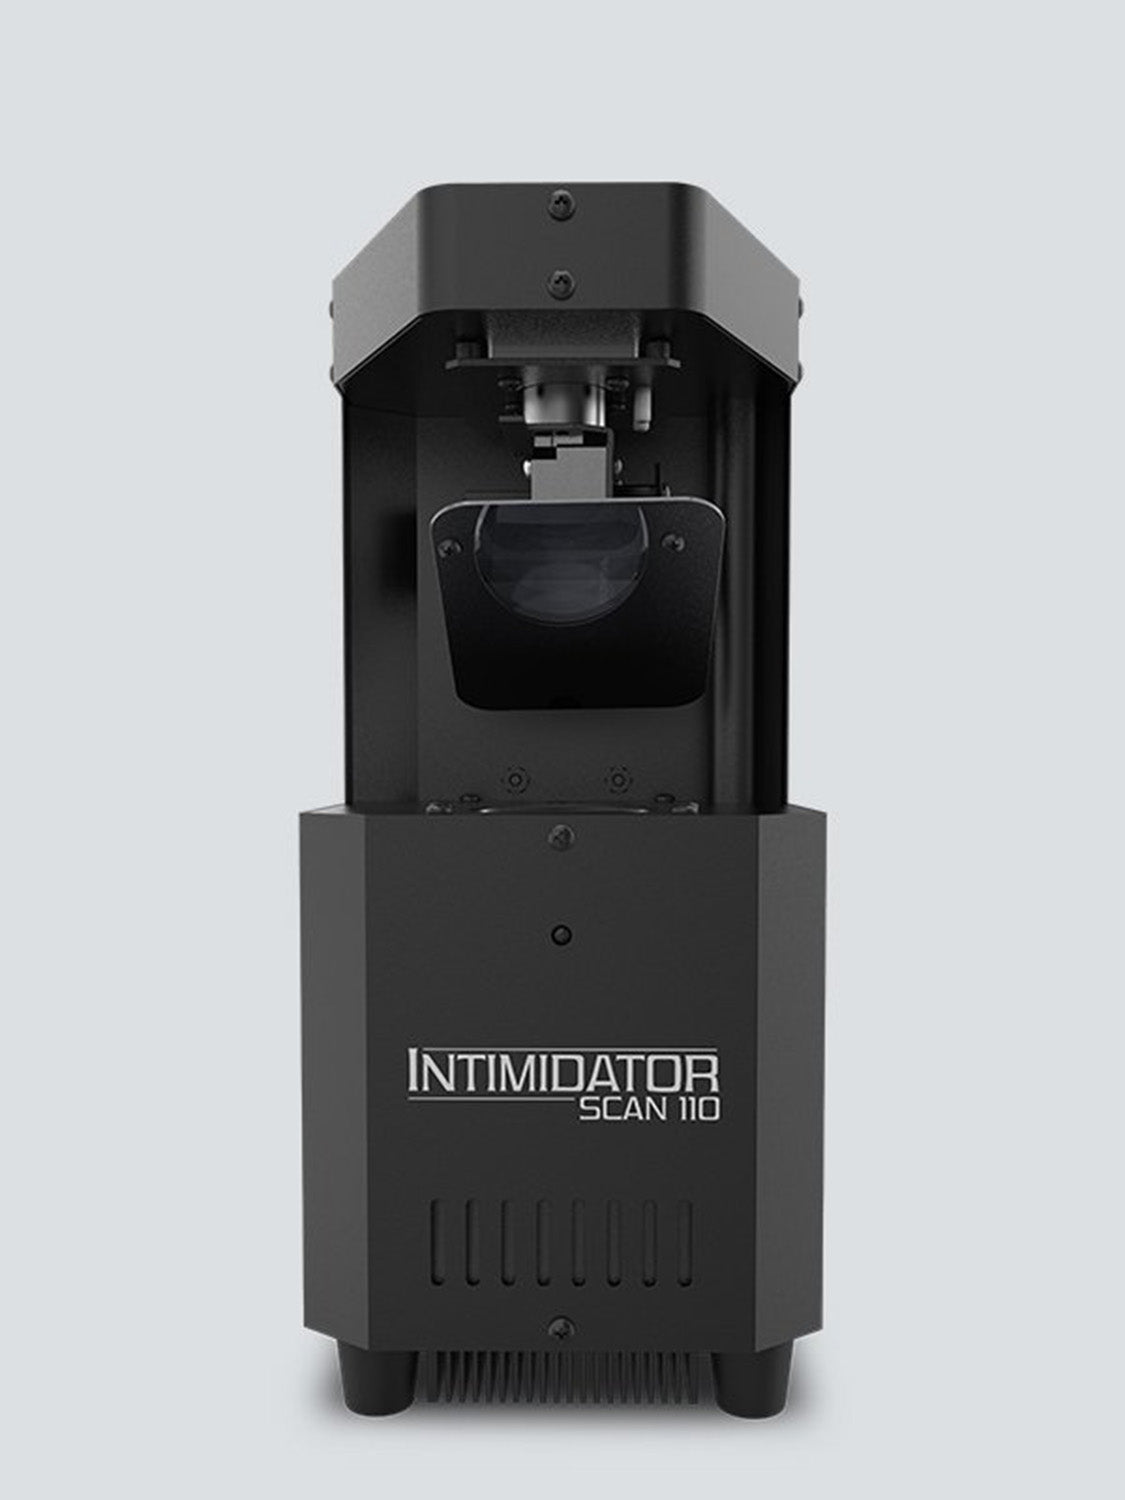 B-Stock: Chauvet DJ Intimidator Scan 110 Mobile Applications LED Scanner - Hollywood DJ